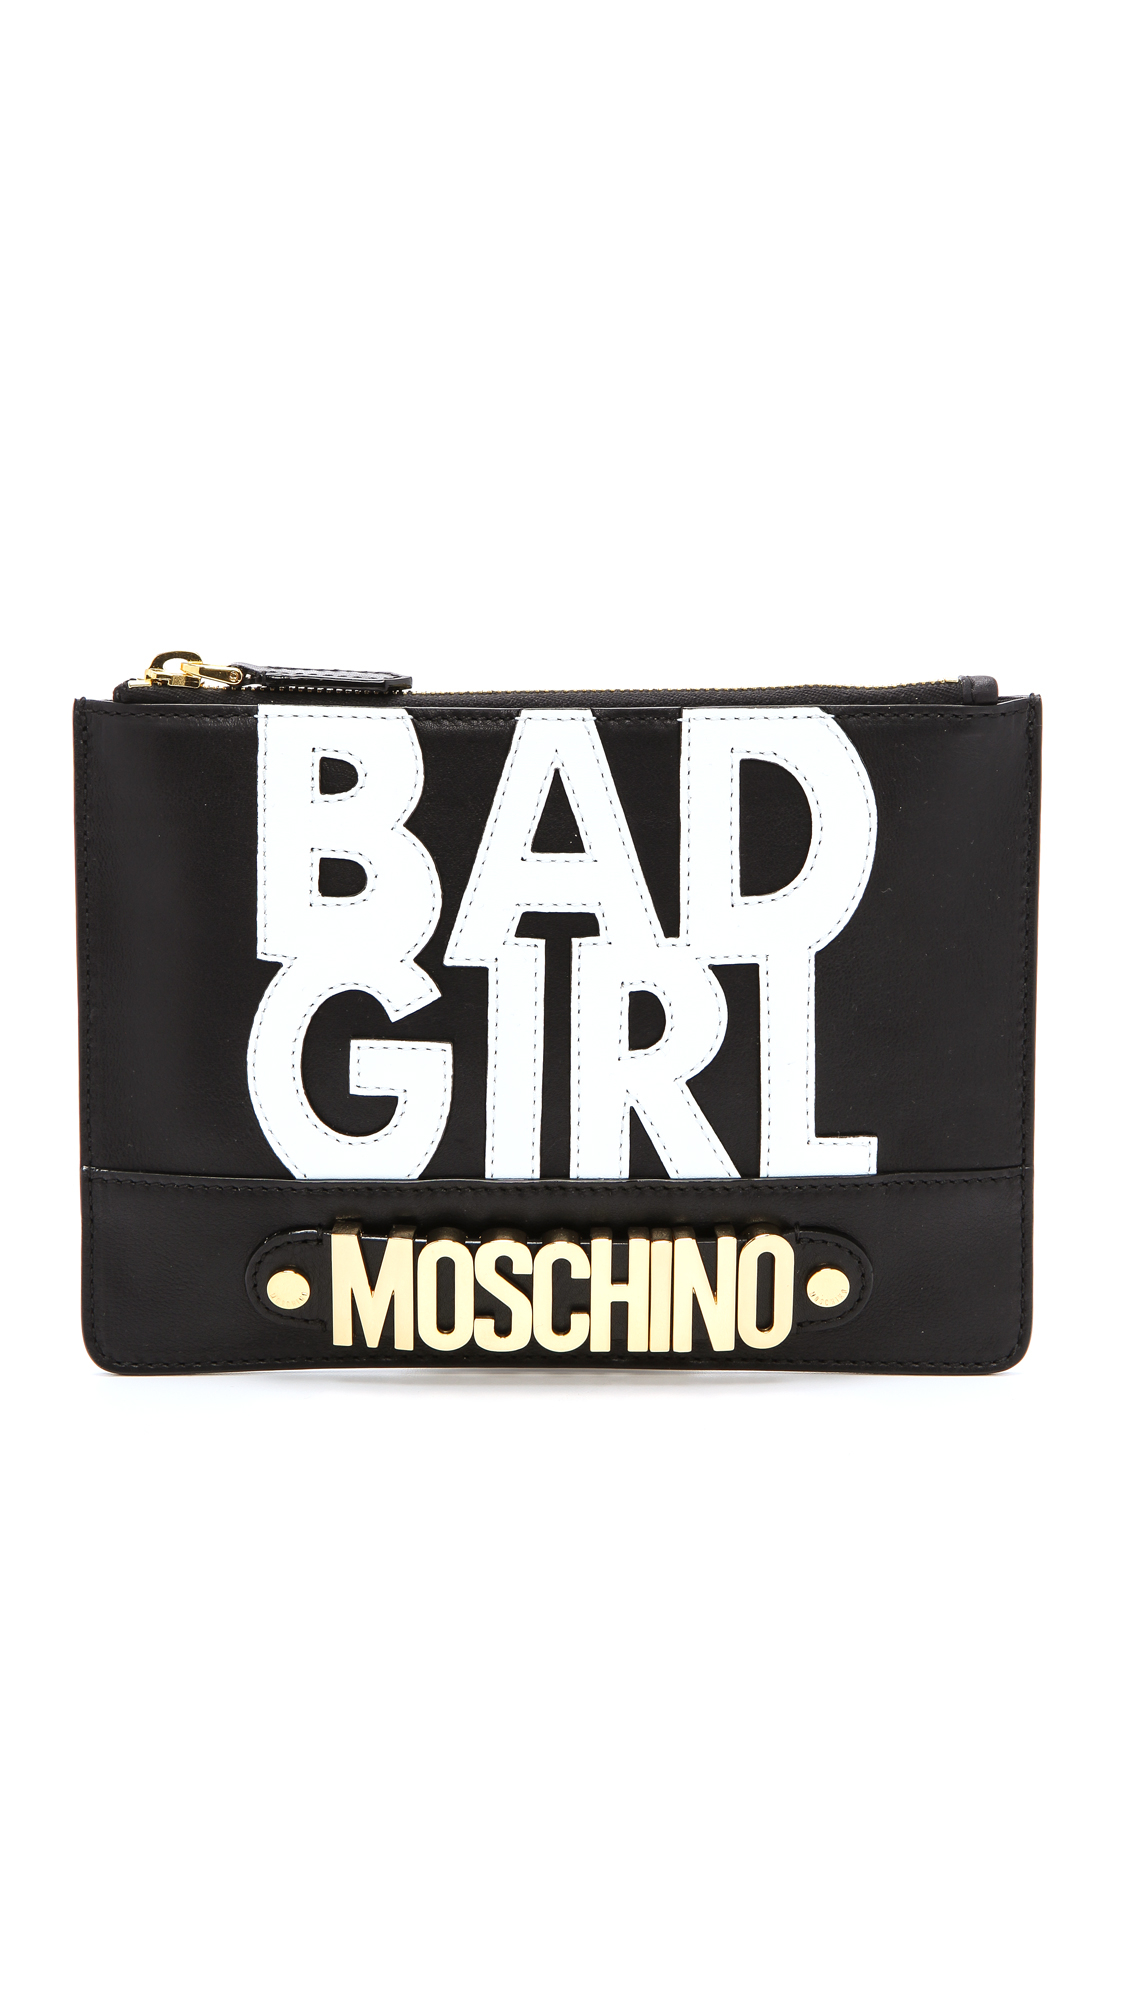 Moschino Bad Girl Clutch in Black | Lyst